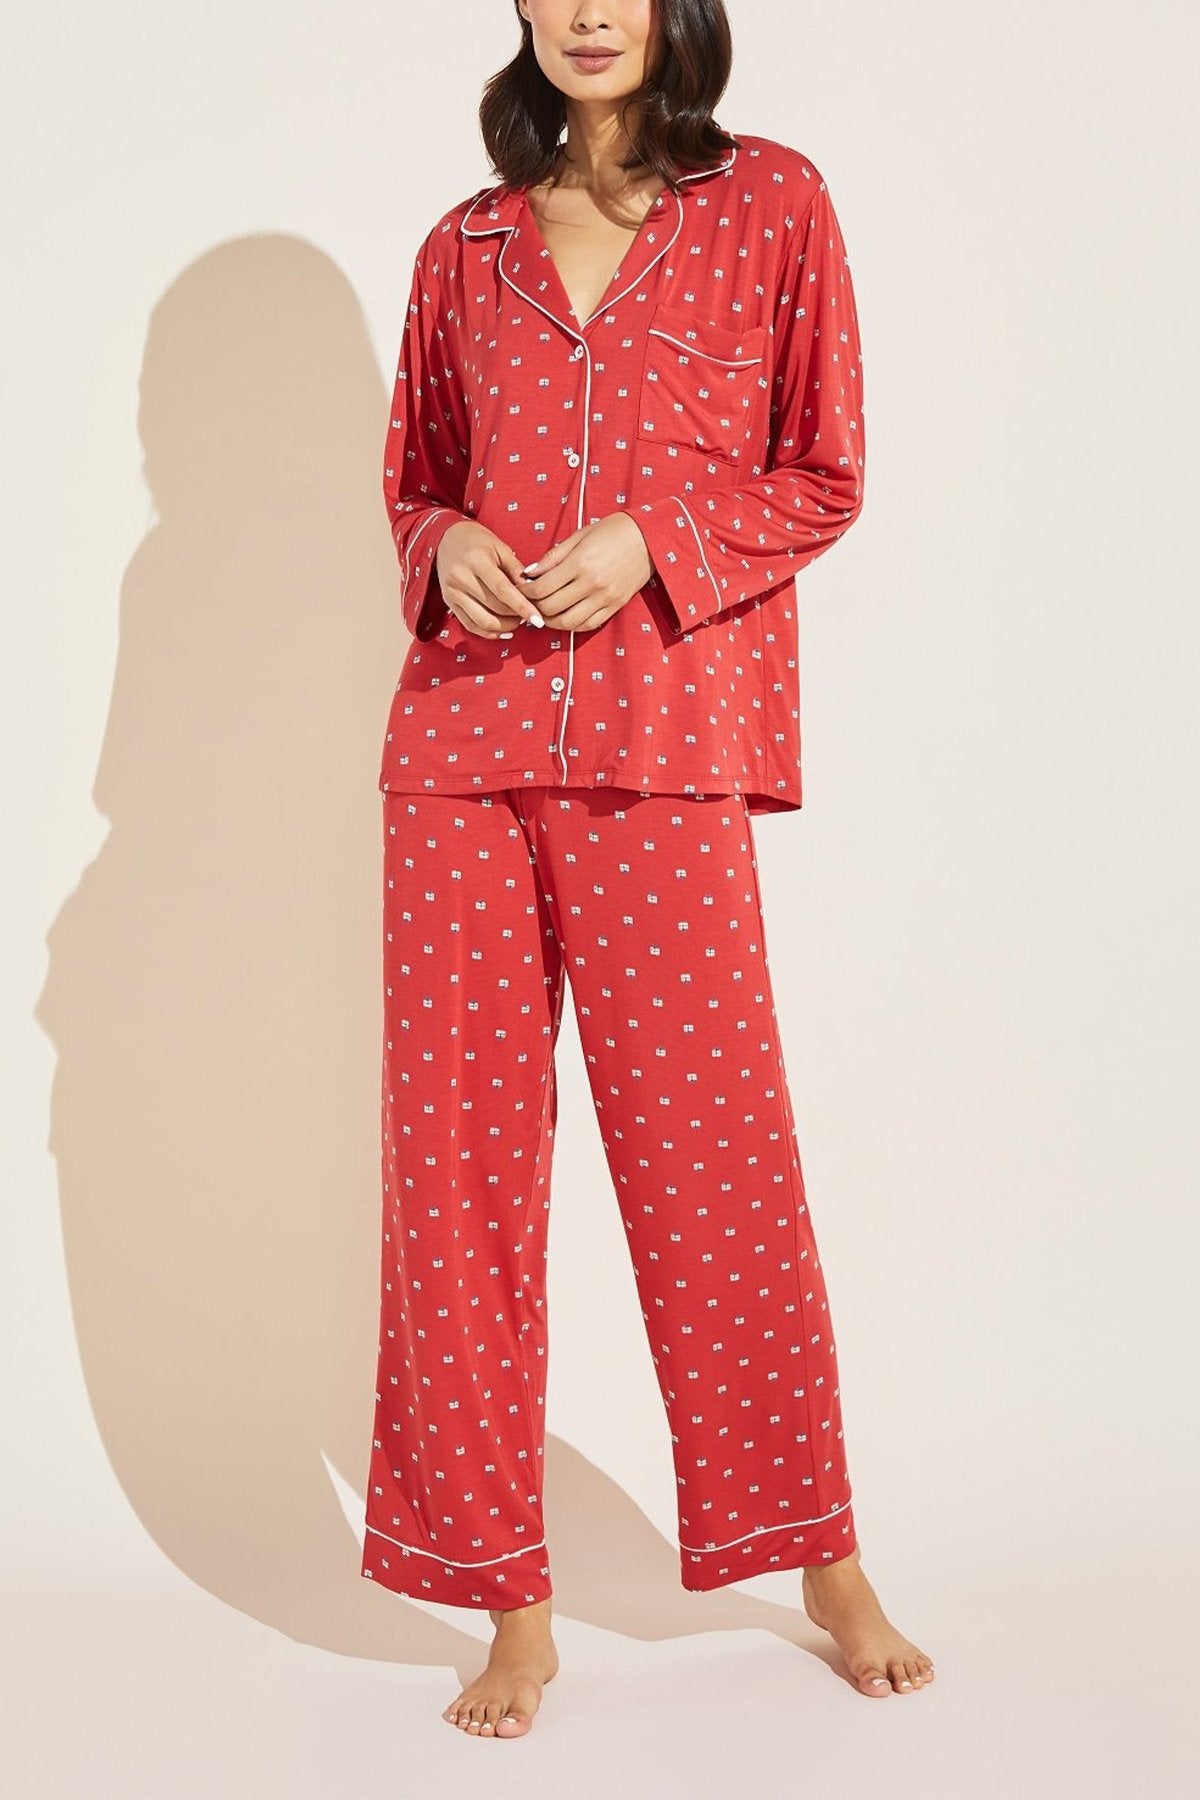 Gisele Printed Long PJ Set in Presents Haute Red/Bone - shop-olivia.com